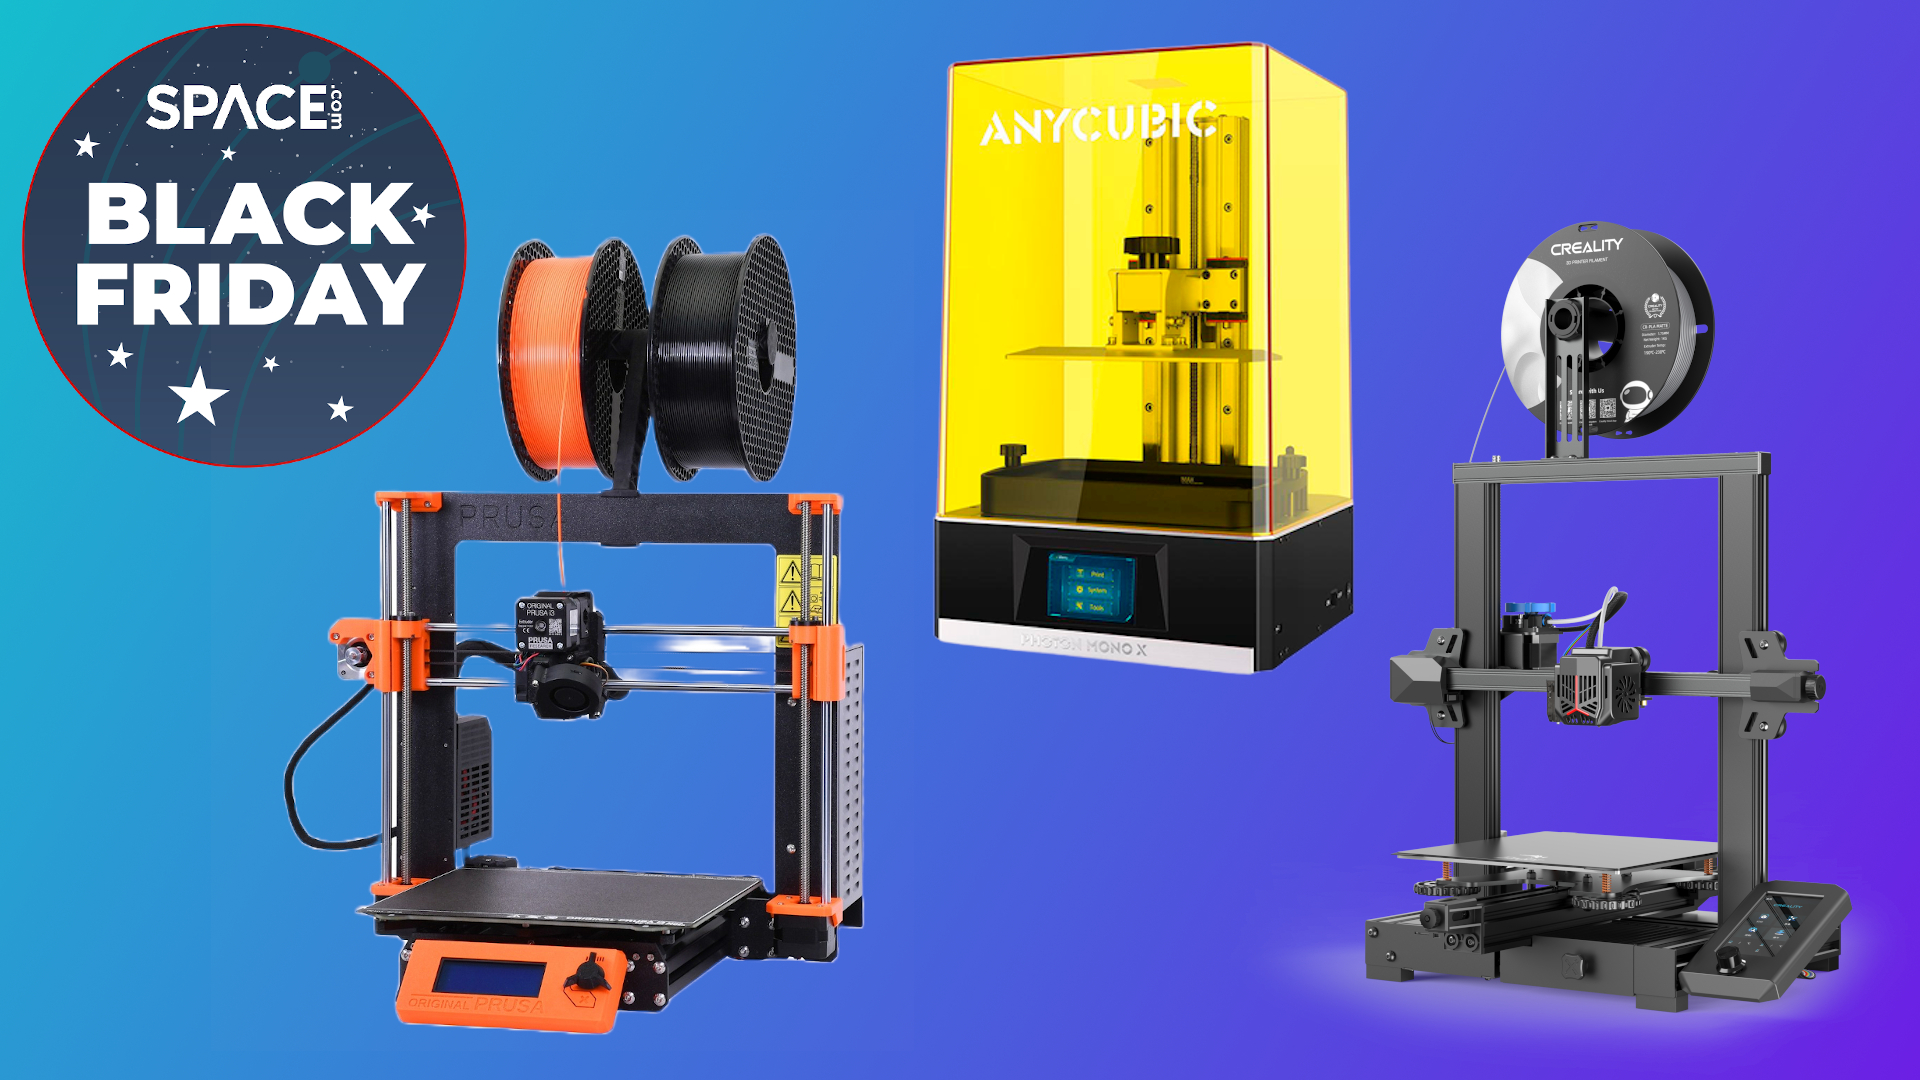 Faret vild Autonomi liberal Which 3D printer should you buy this Black Friday? | Space